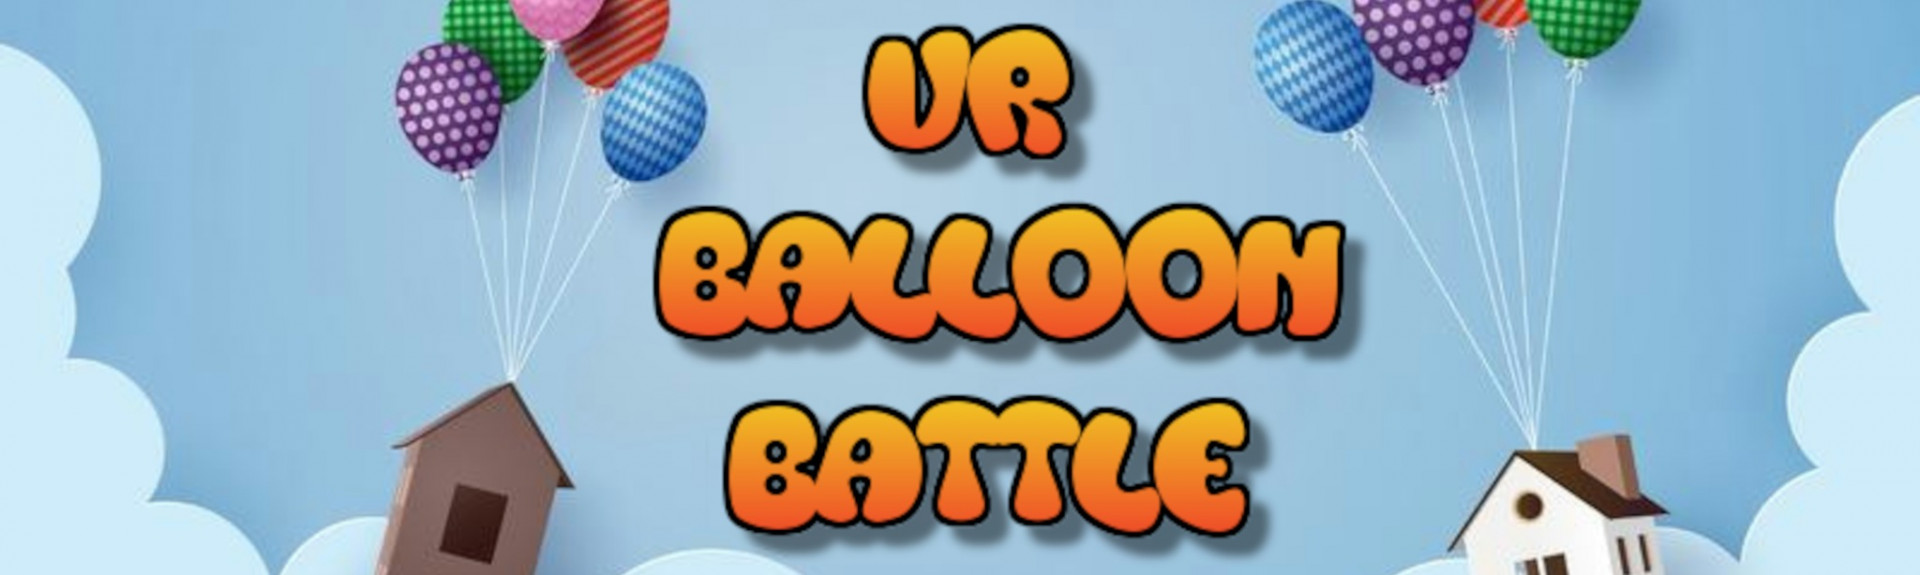 VR Balloon Battle